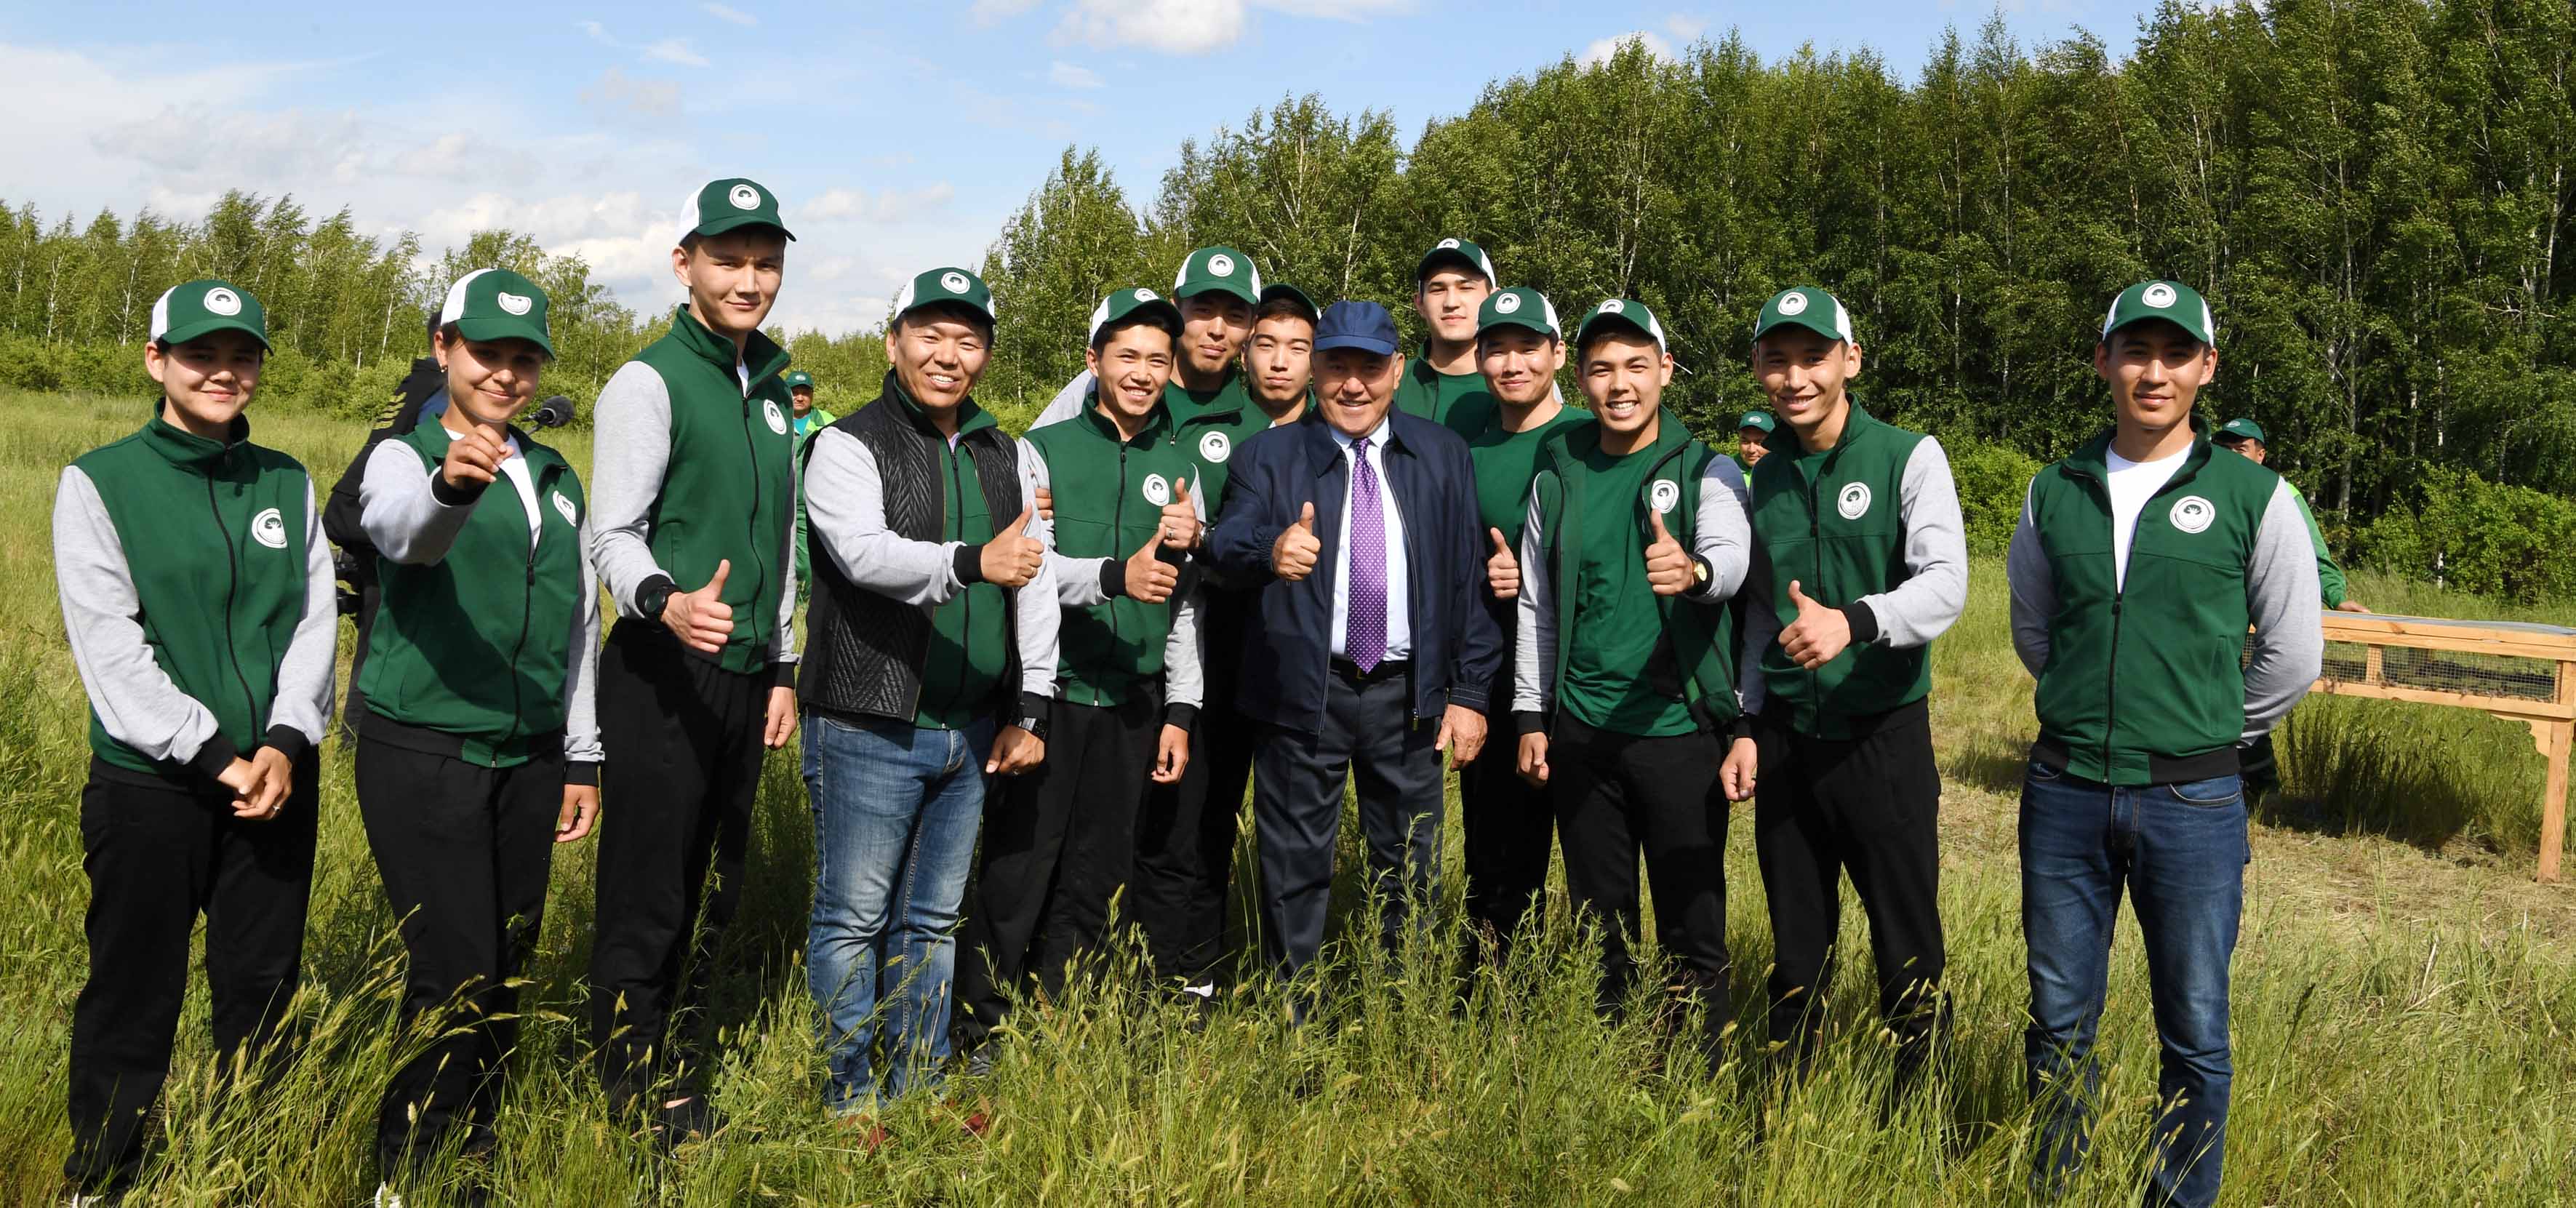 Kazakh President visits Astana’s green space